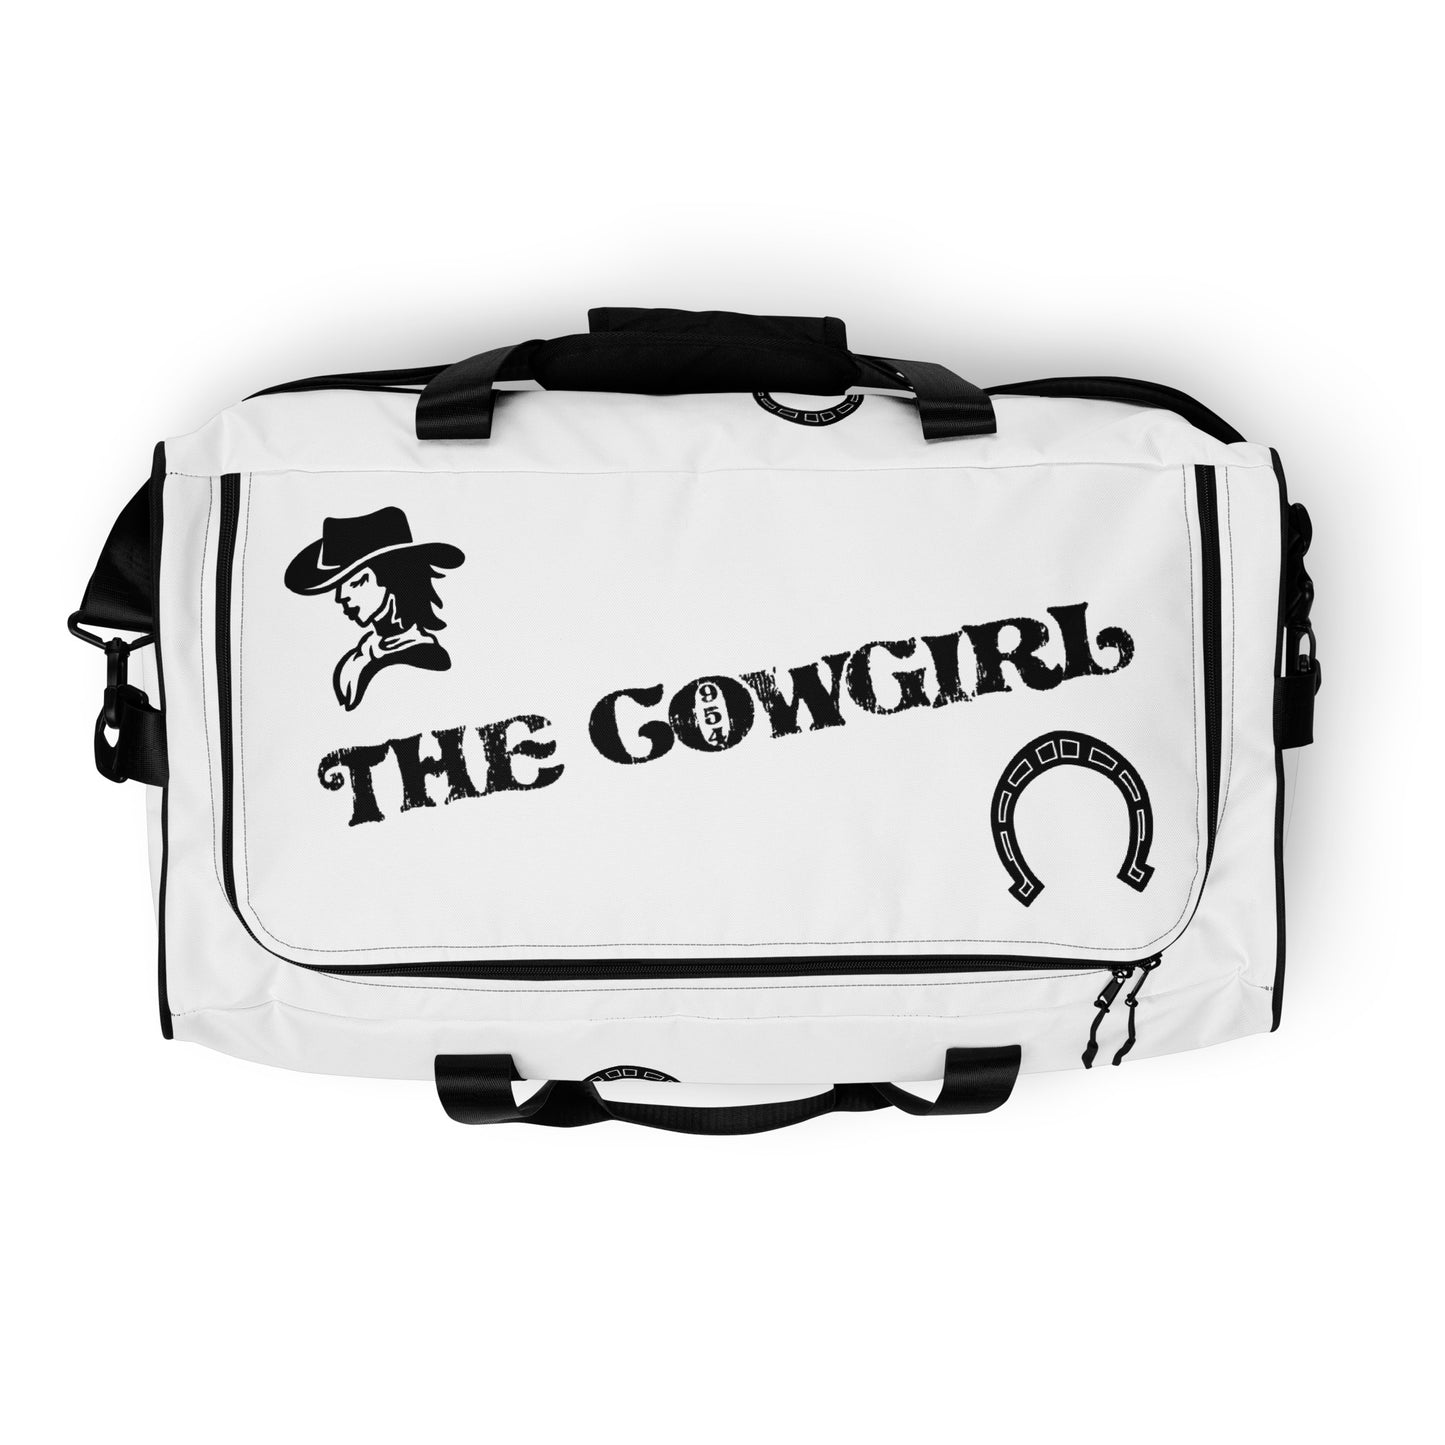 The Cowgirl 954 Signature Duffle bag